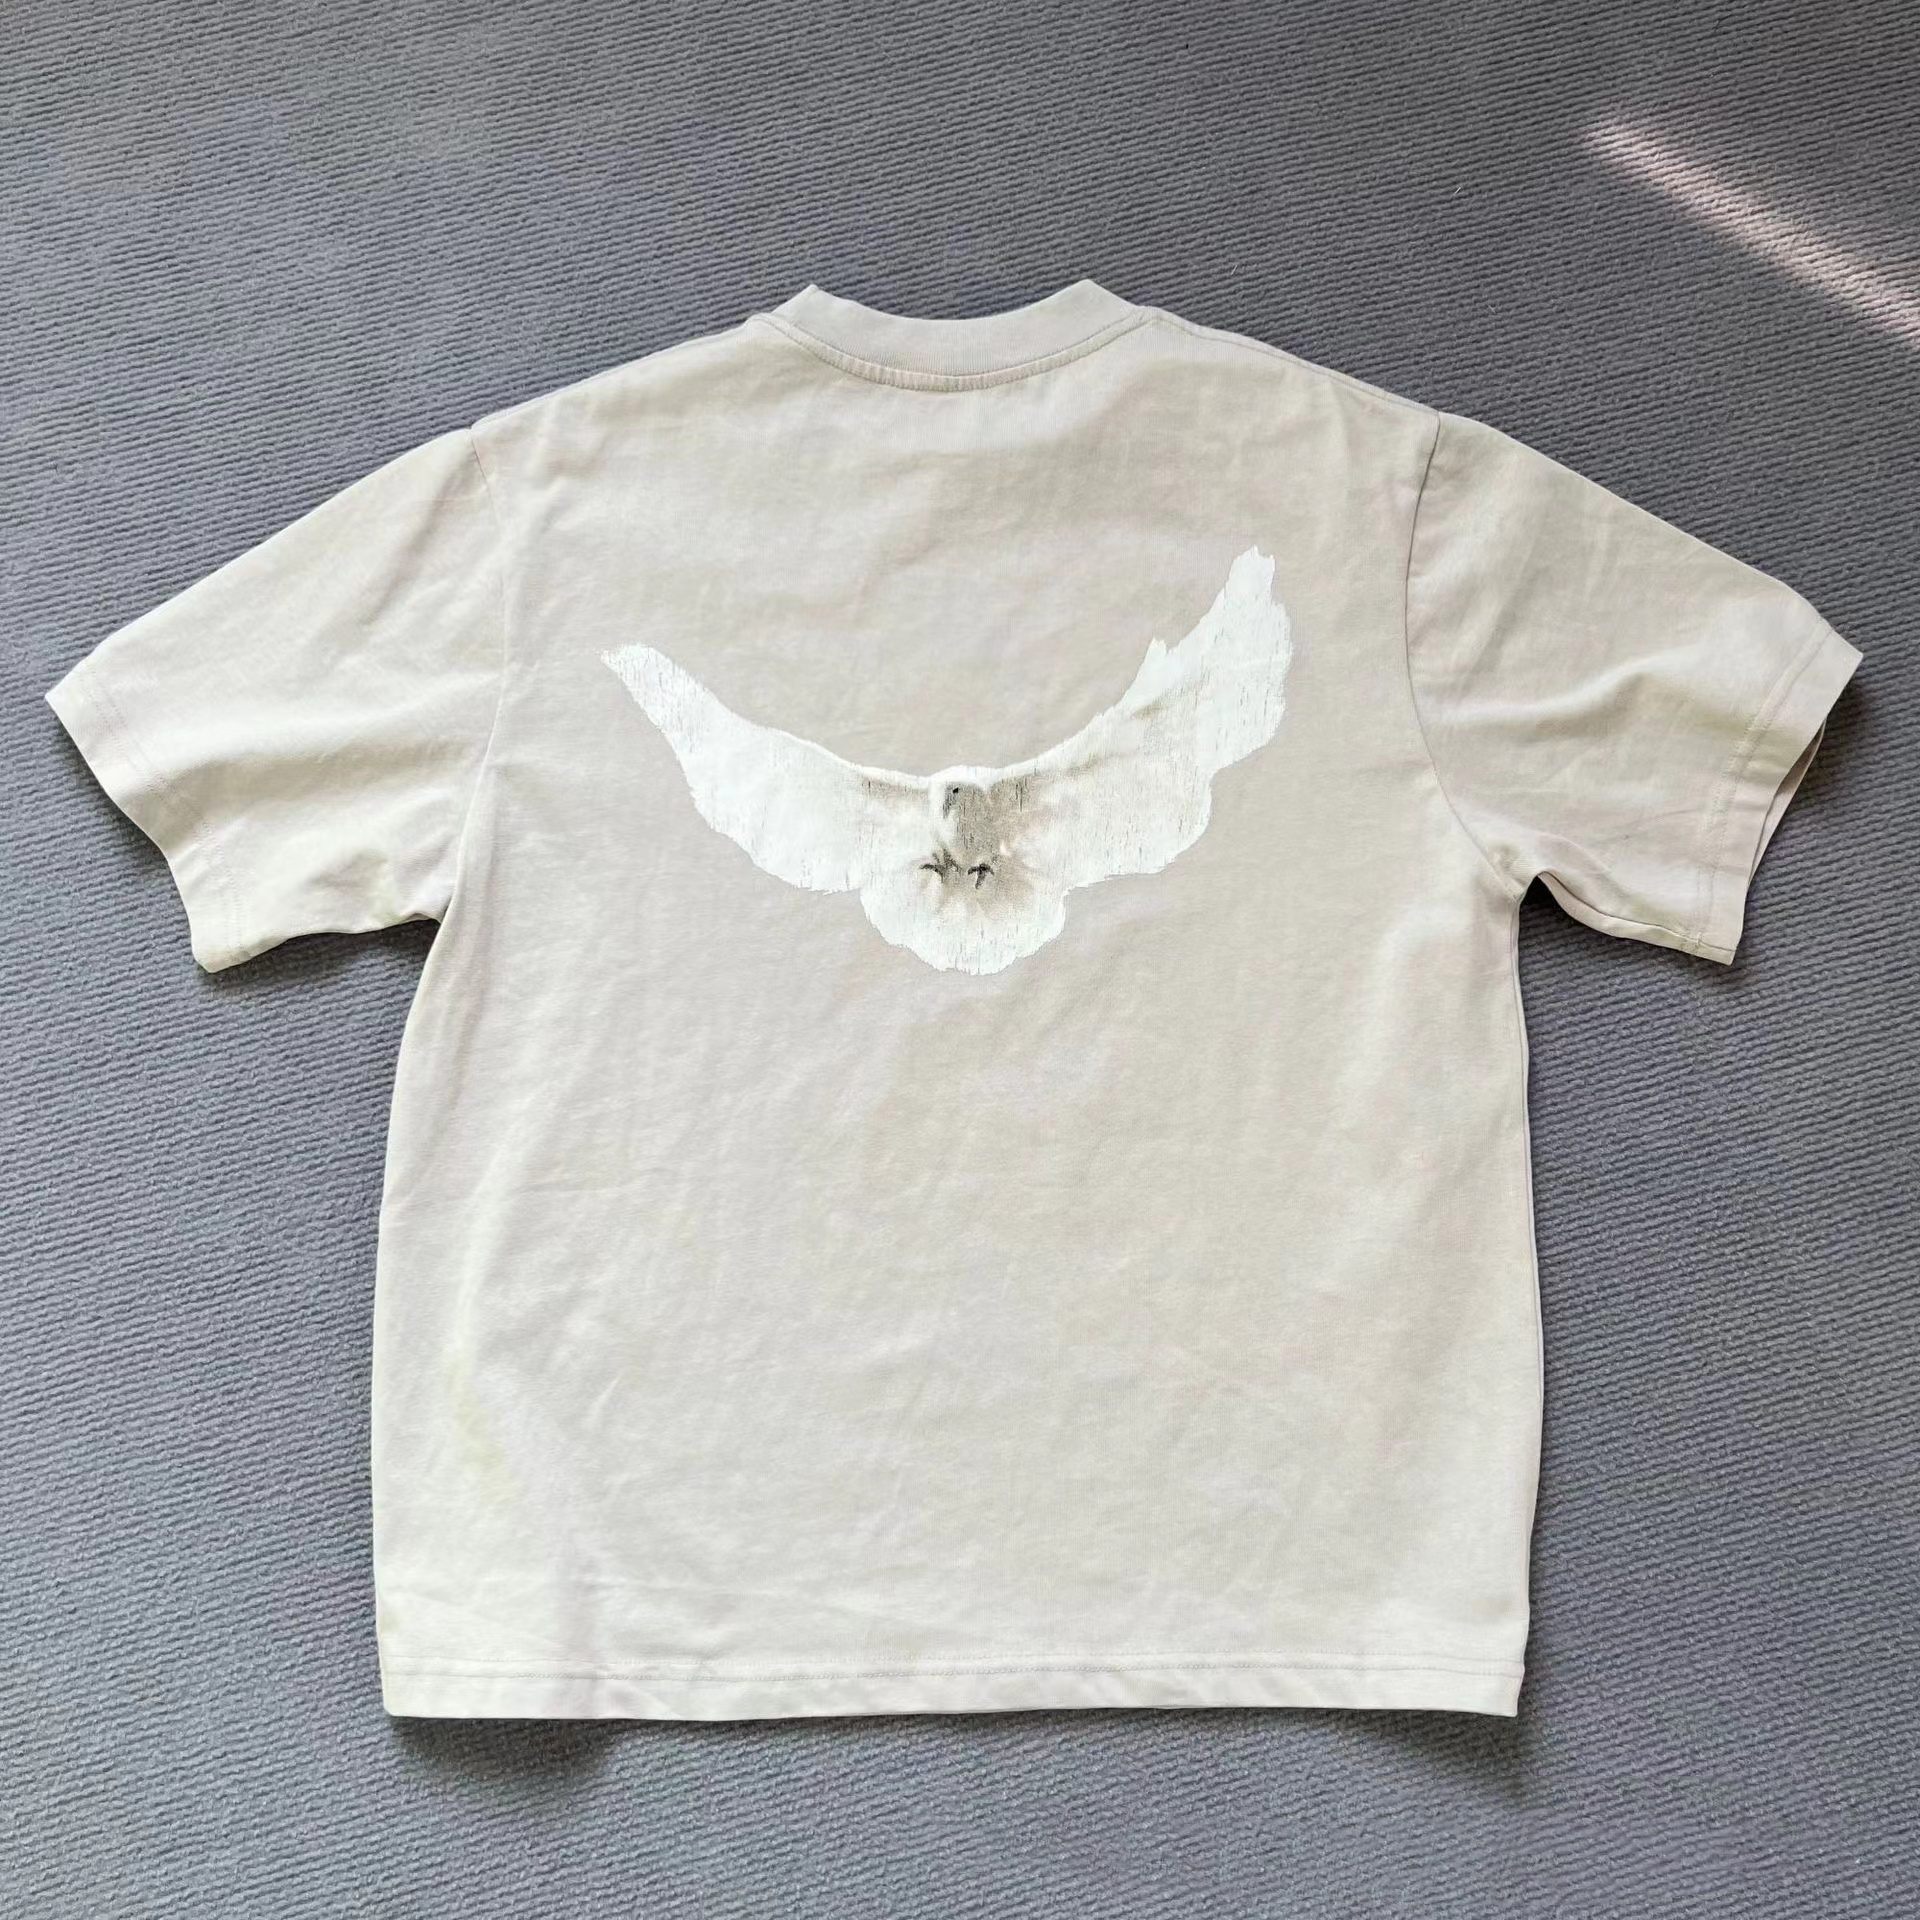 mens designer t shirt tshirt designe shirt 260g weight cotton febric mens womens unisex dove pattern Wholesale 5% off